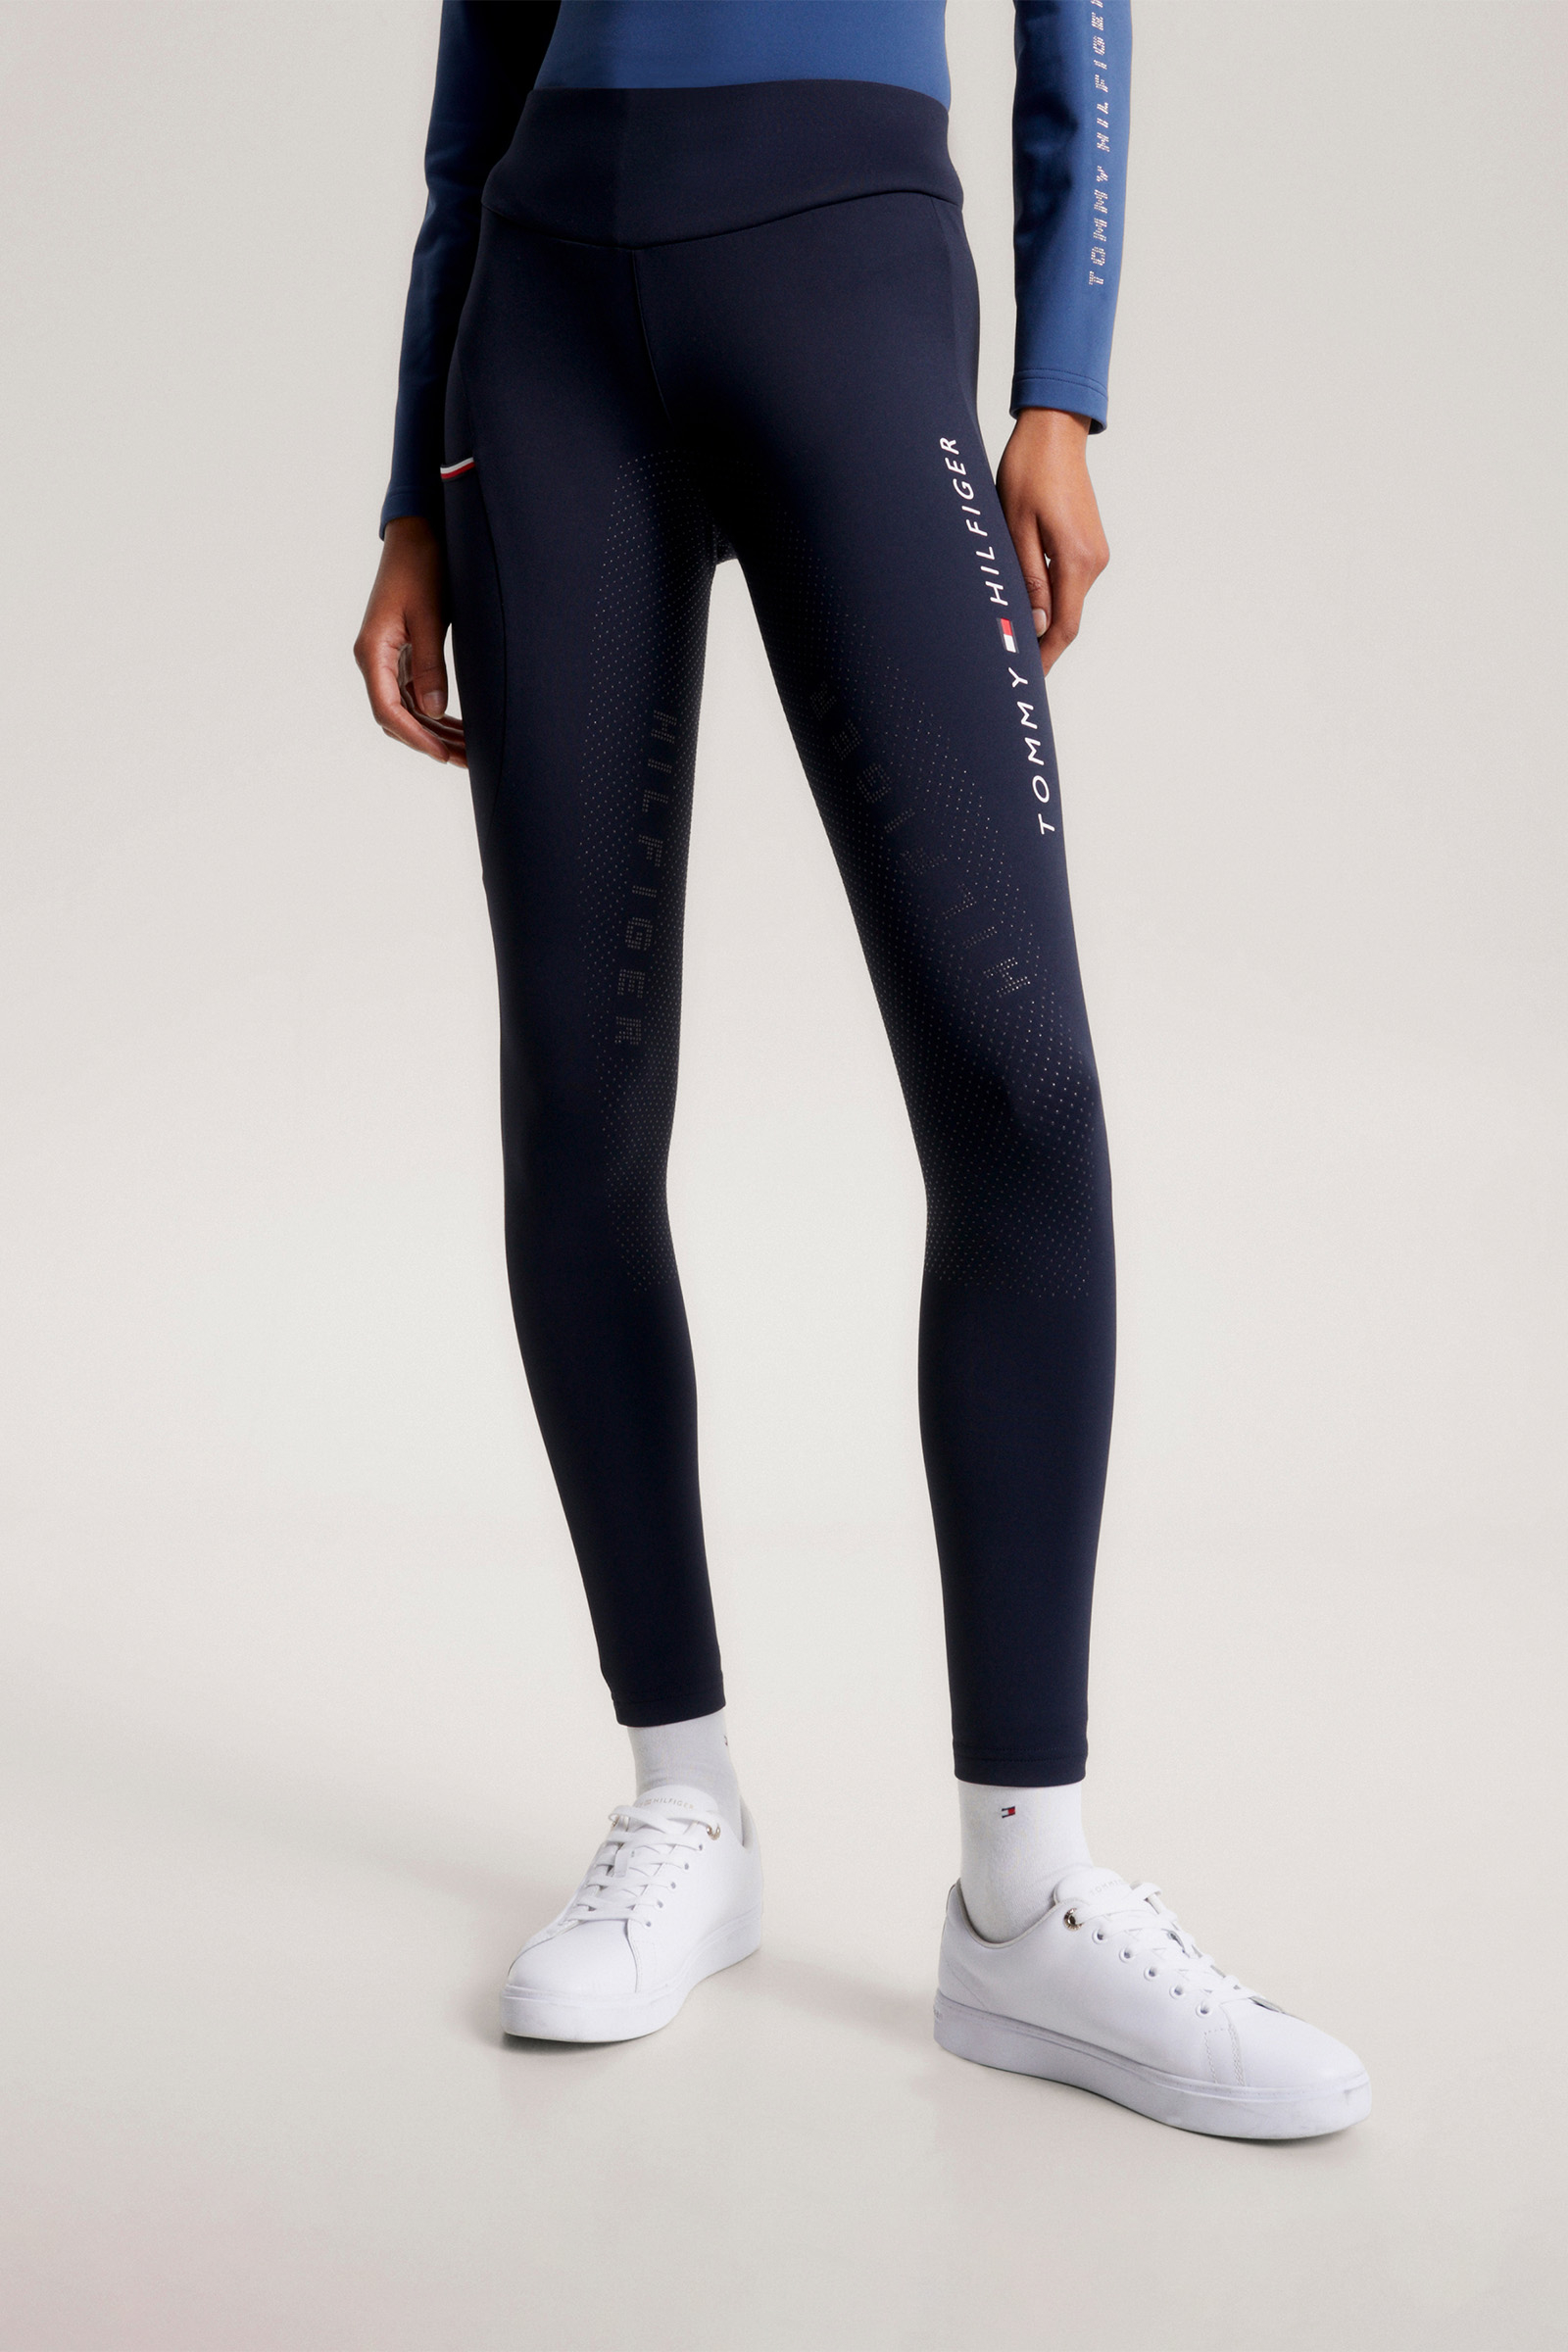 Tommy Hilfiger Women's High Rise Stretch Logo Legging, Navy